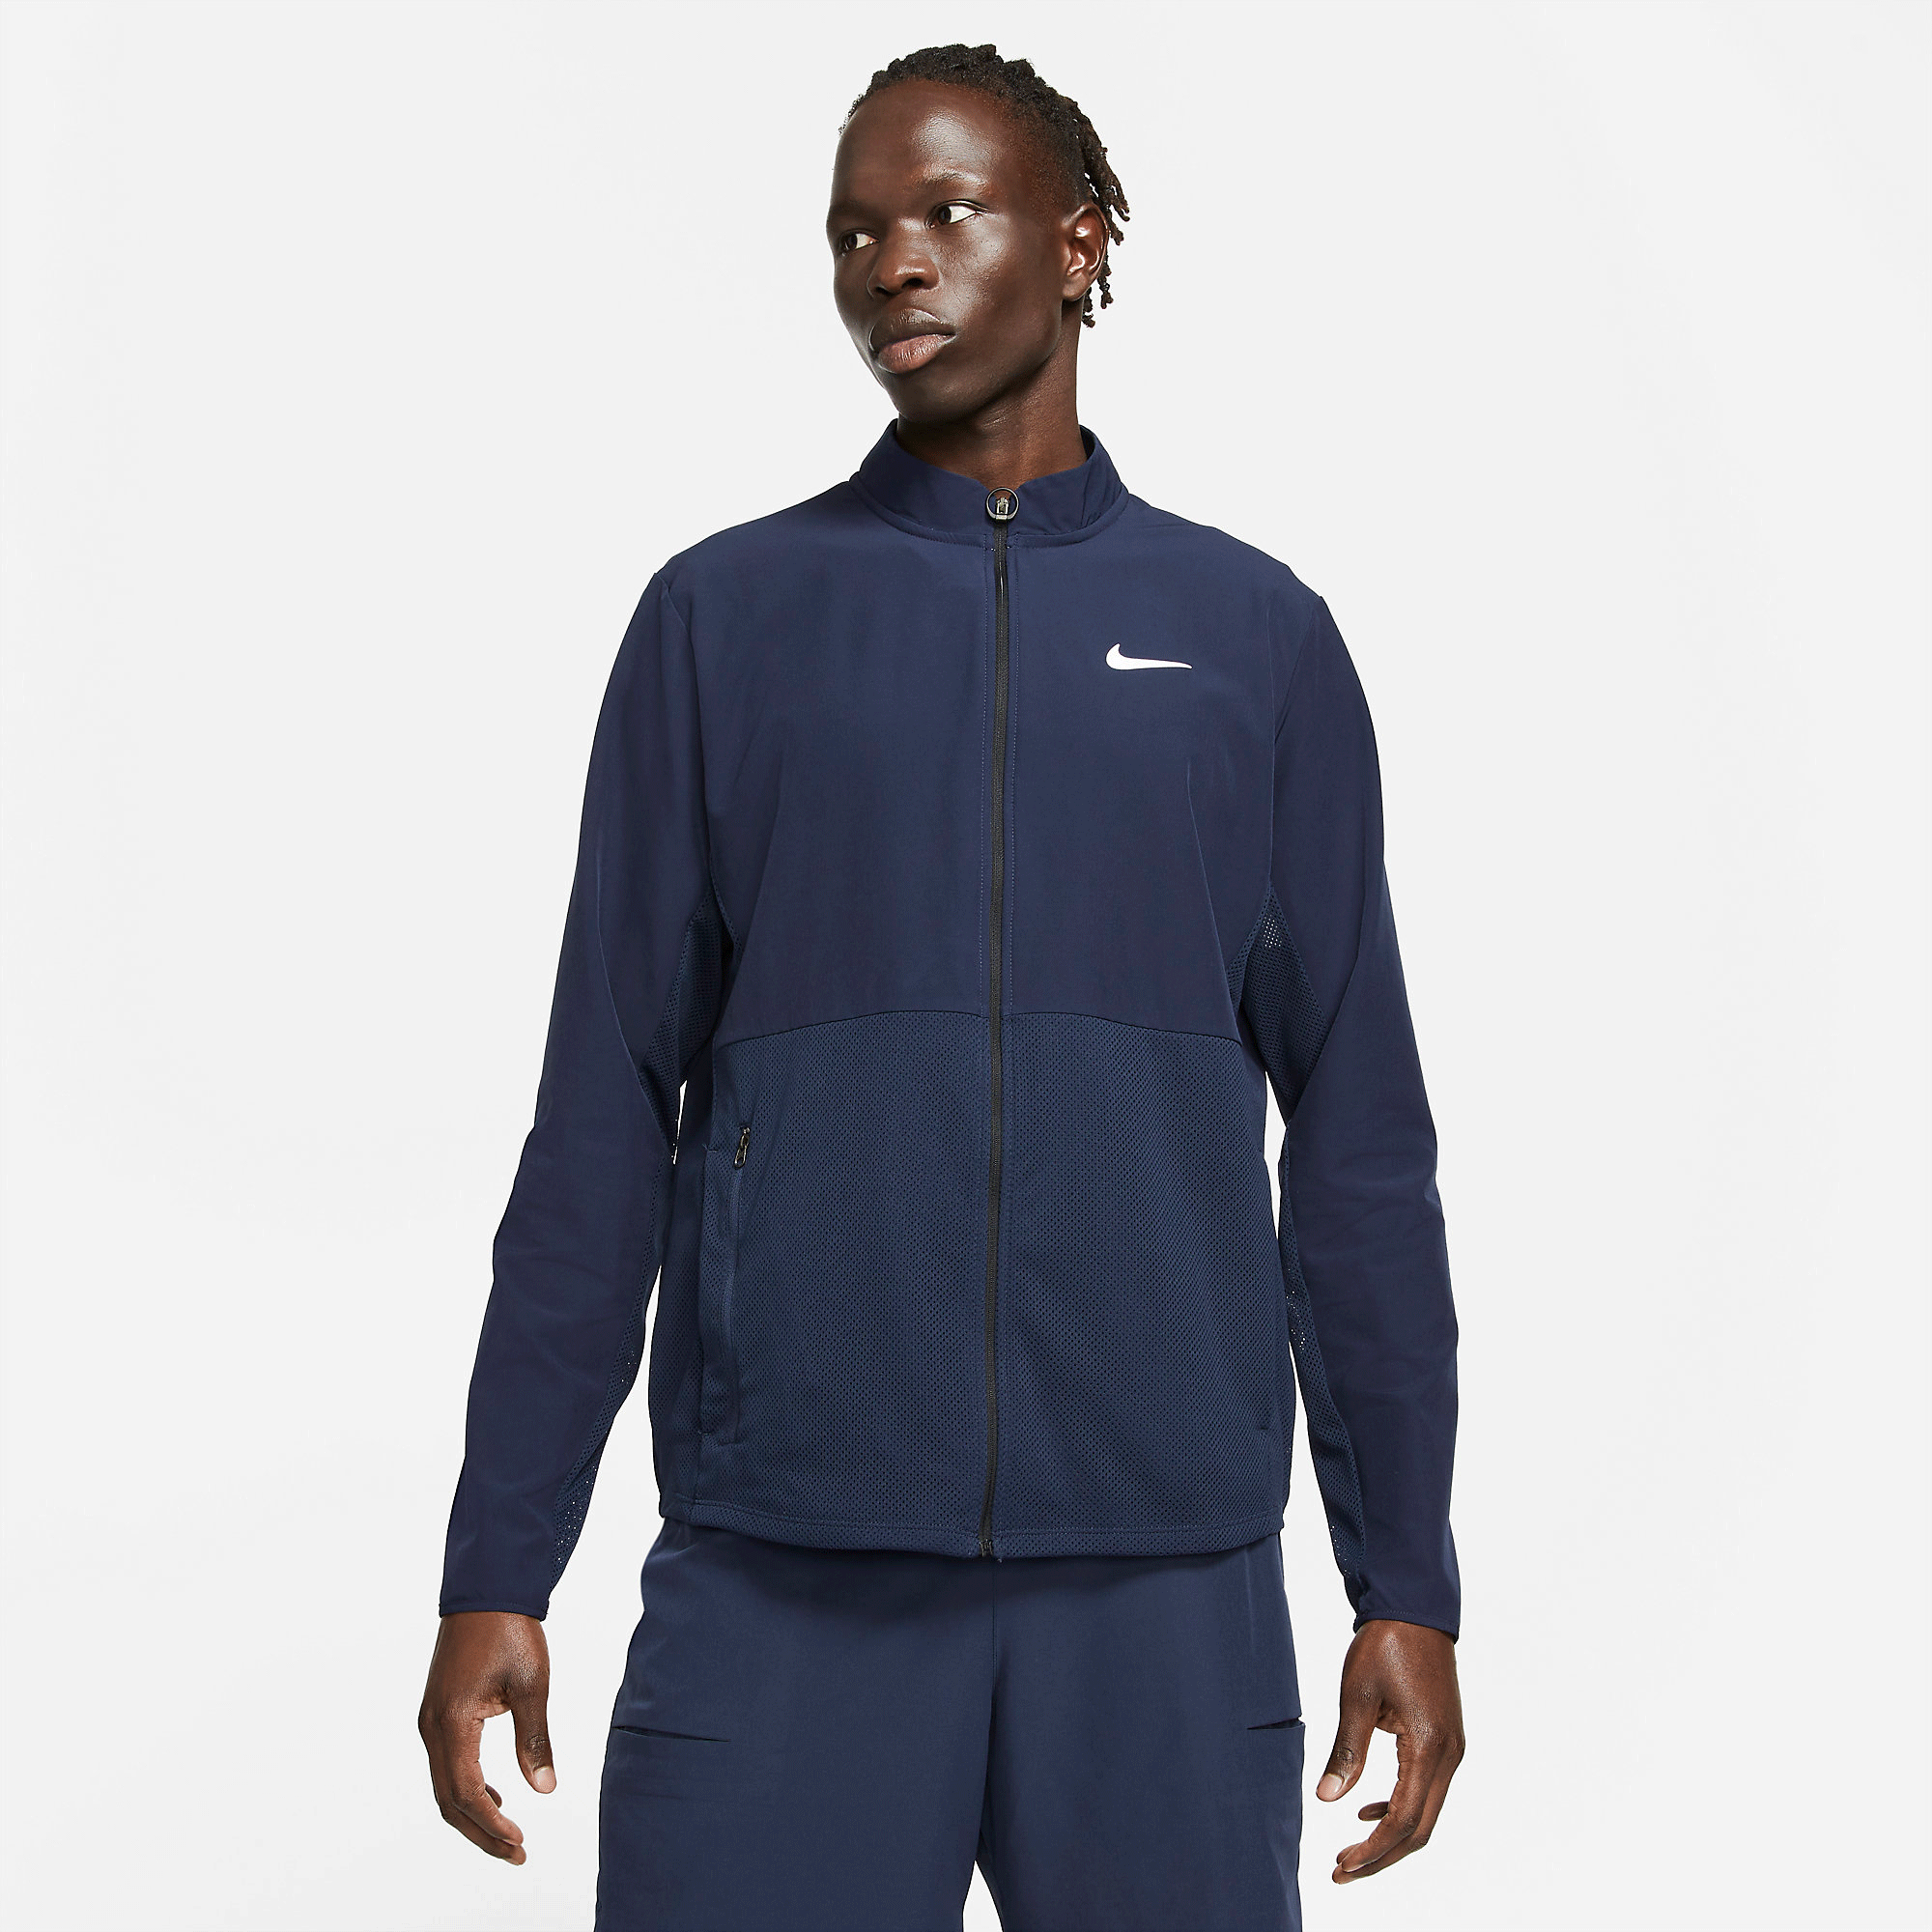 Nike Mens Advantage Tennis Jacket - Navy Blue - Tennisnuts.com